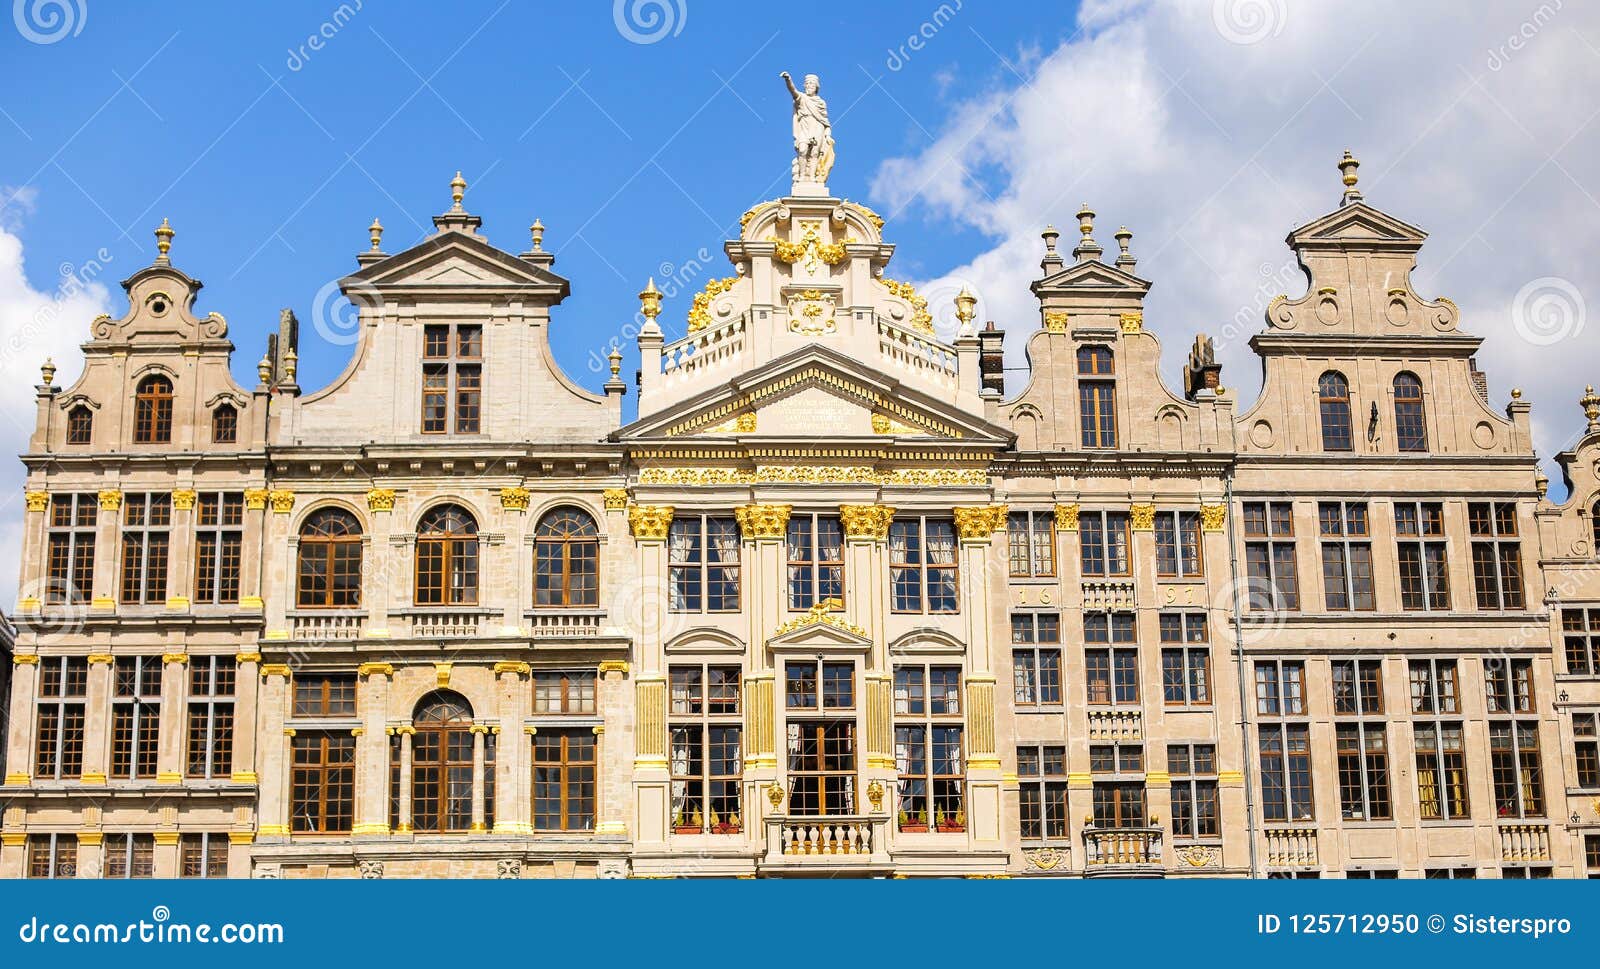 Royal Palace of Brussels, Belgium, Europe - Stock Photo 